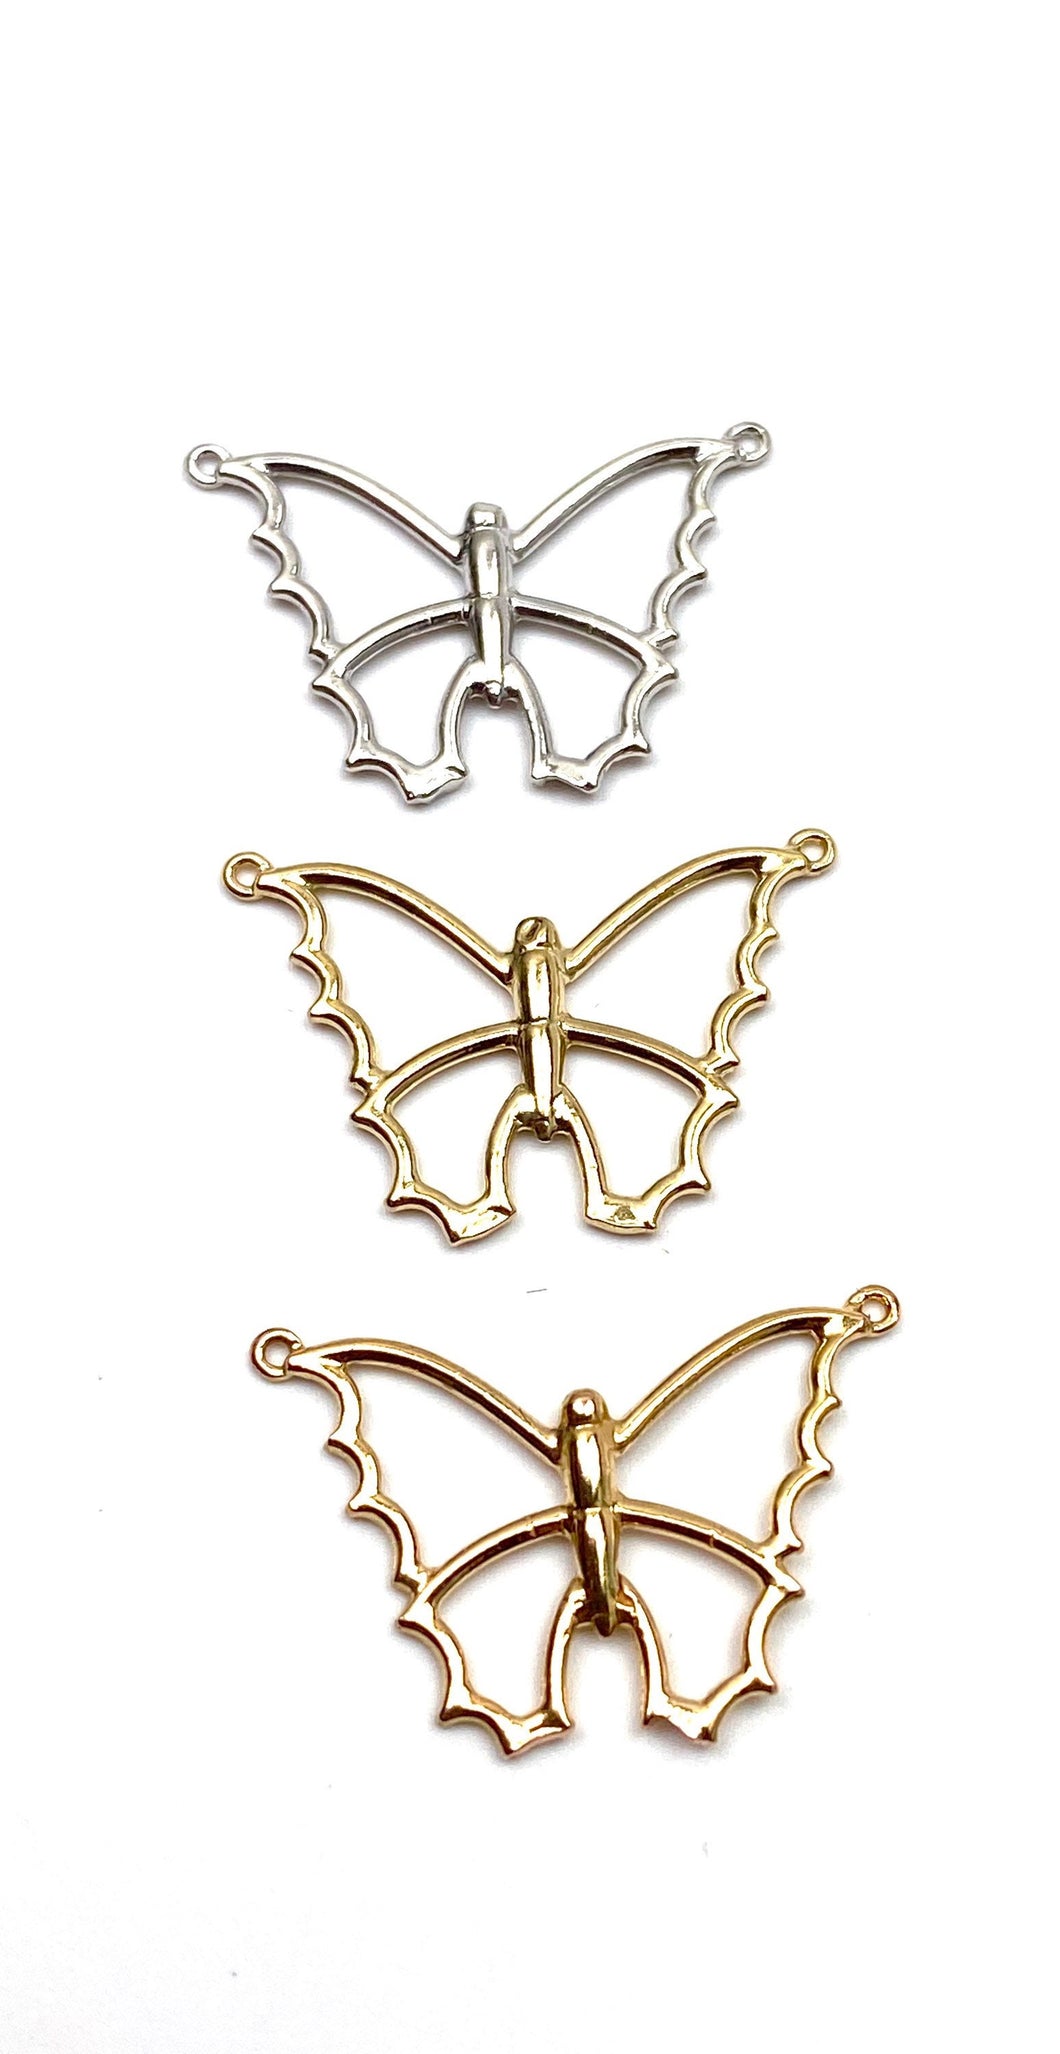 14k butterfly charm,Rose gold, Gold, White gold, SKU# L-152